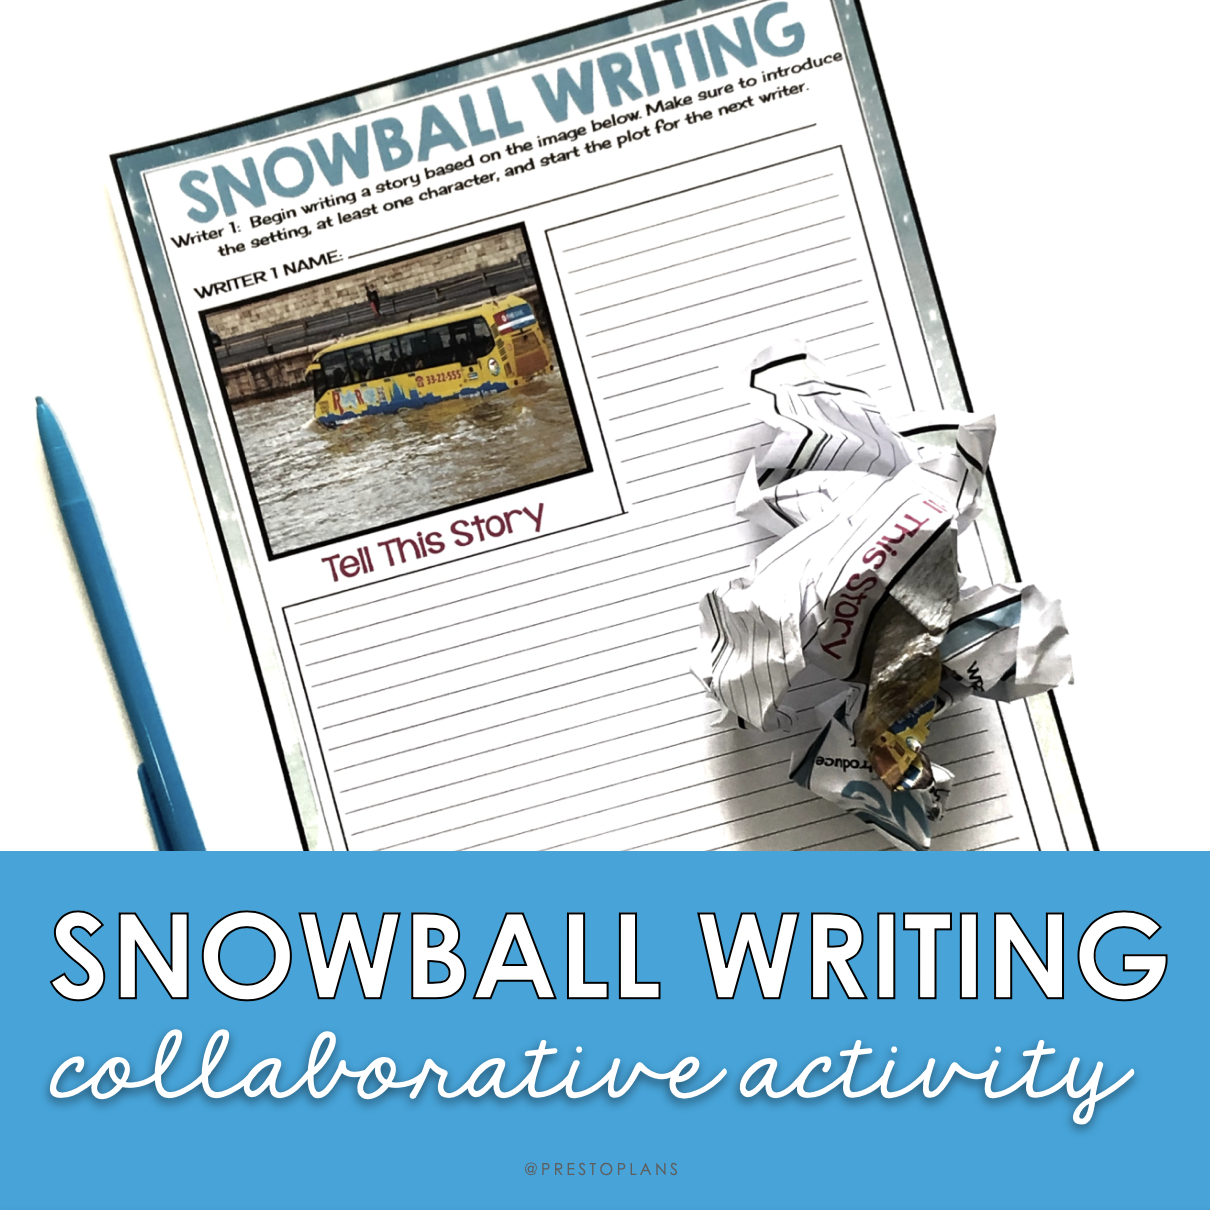 Snowball writing